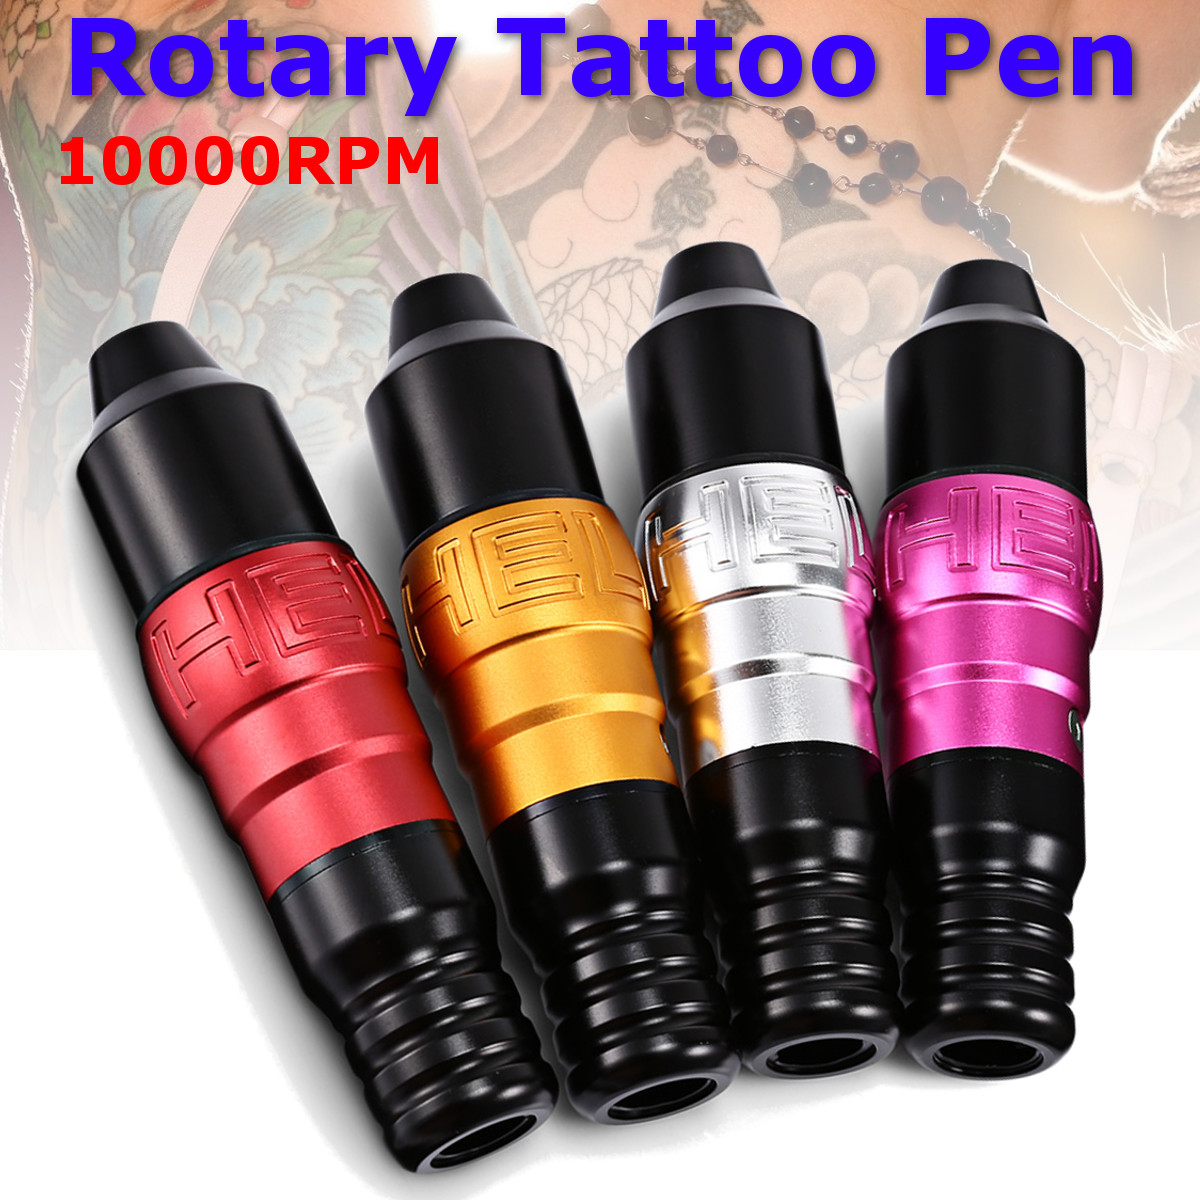 10000RPM-Rotary-Tattoo-Pen-Mabuchi-Motor-Needle-Cartridge-Direct-Drive-Machine-1357434